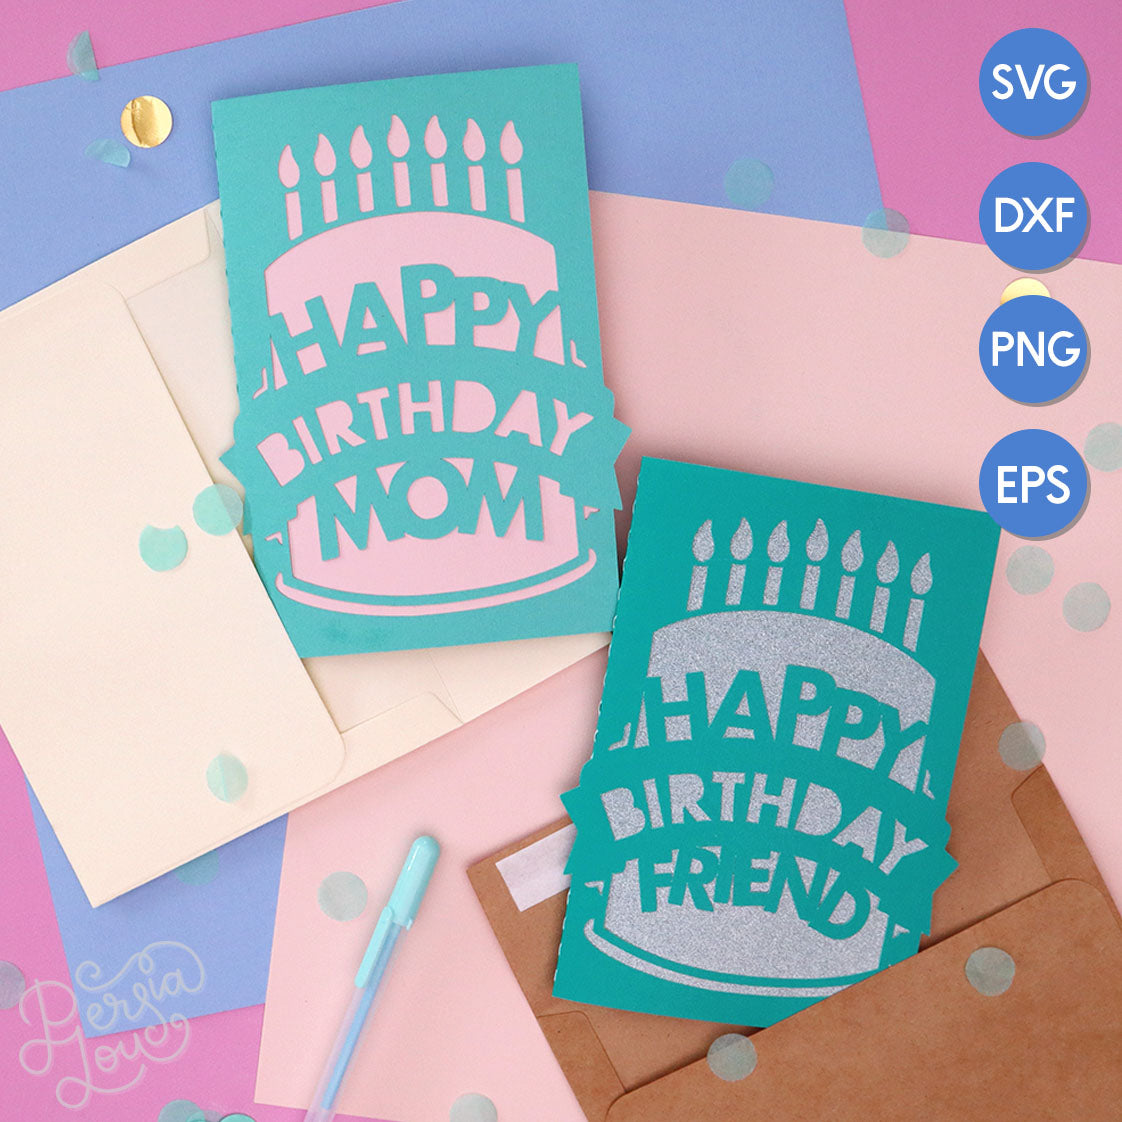 Happy Birthday Cake Embellished Birthday Greeting Card | Cards